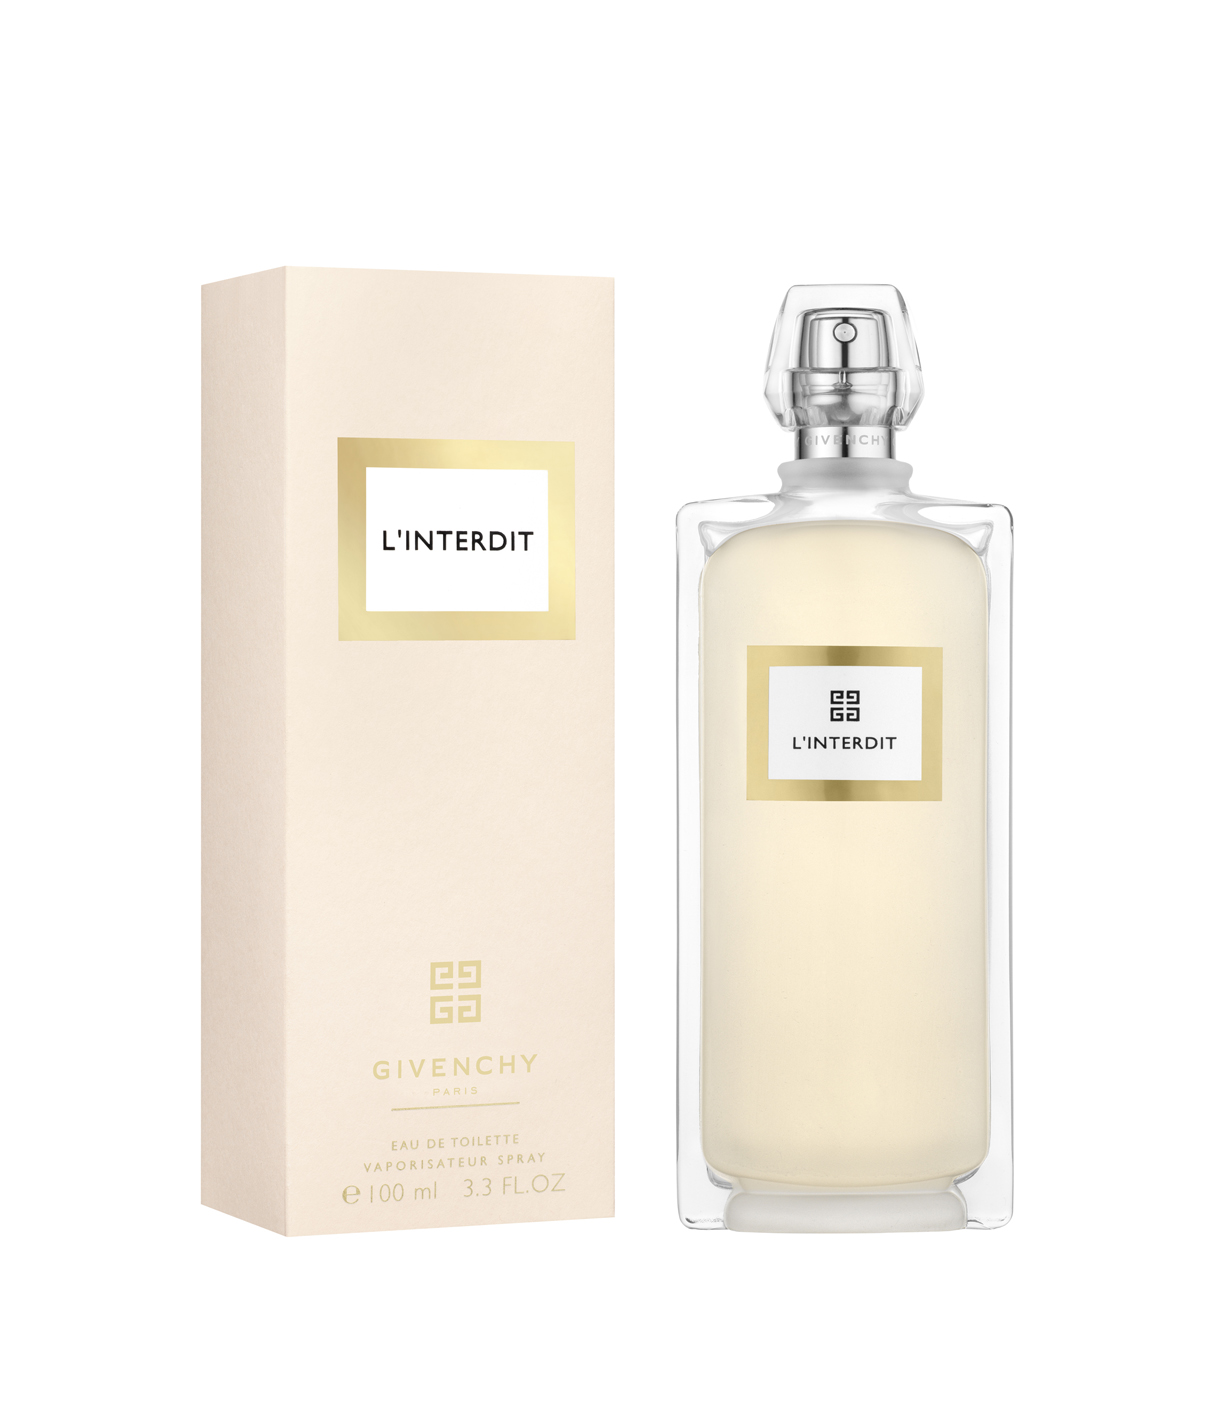 Perfume L'Interdit, de Givenchy